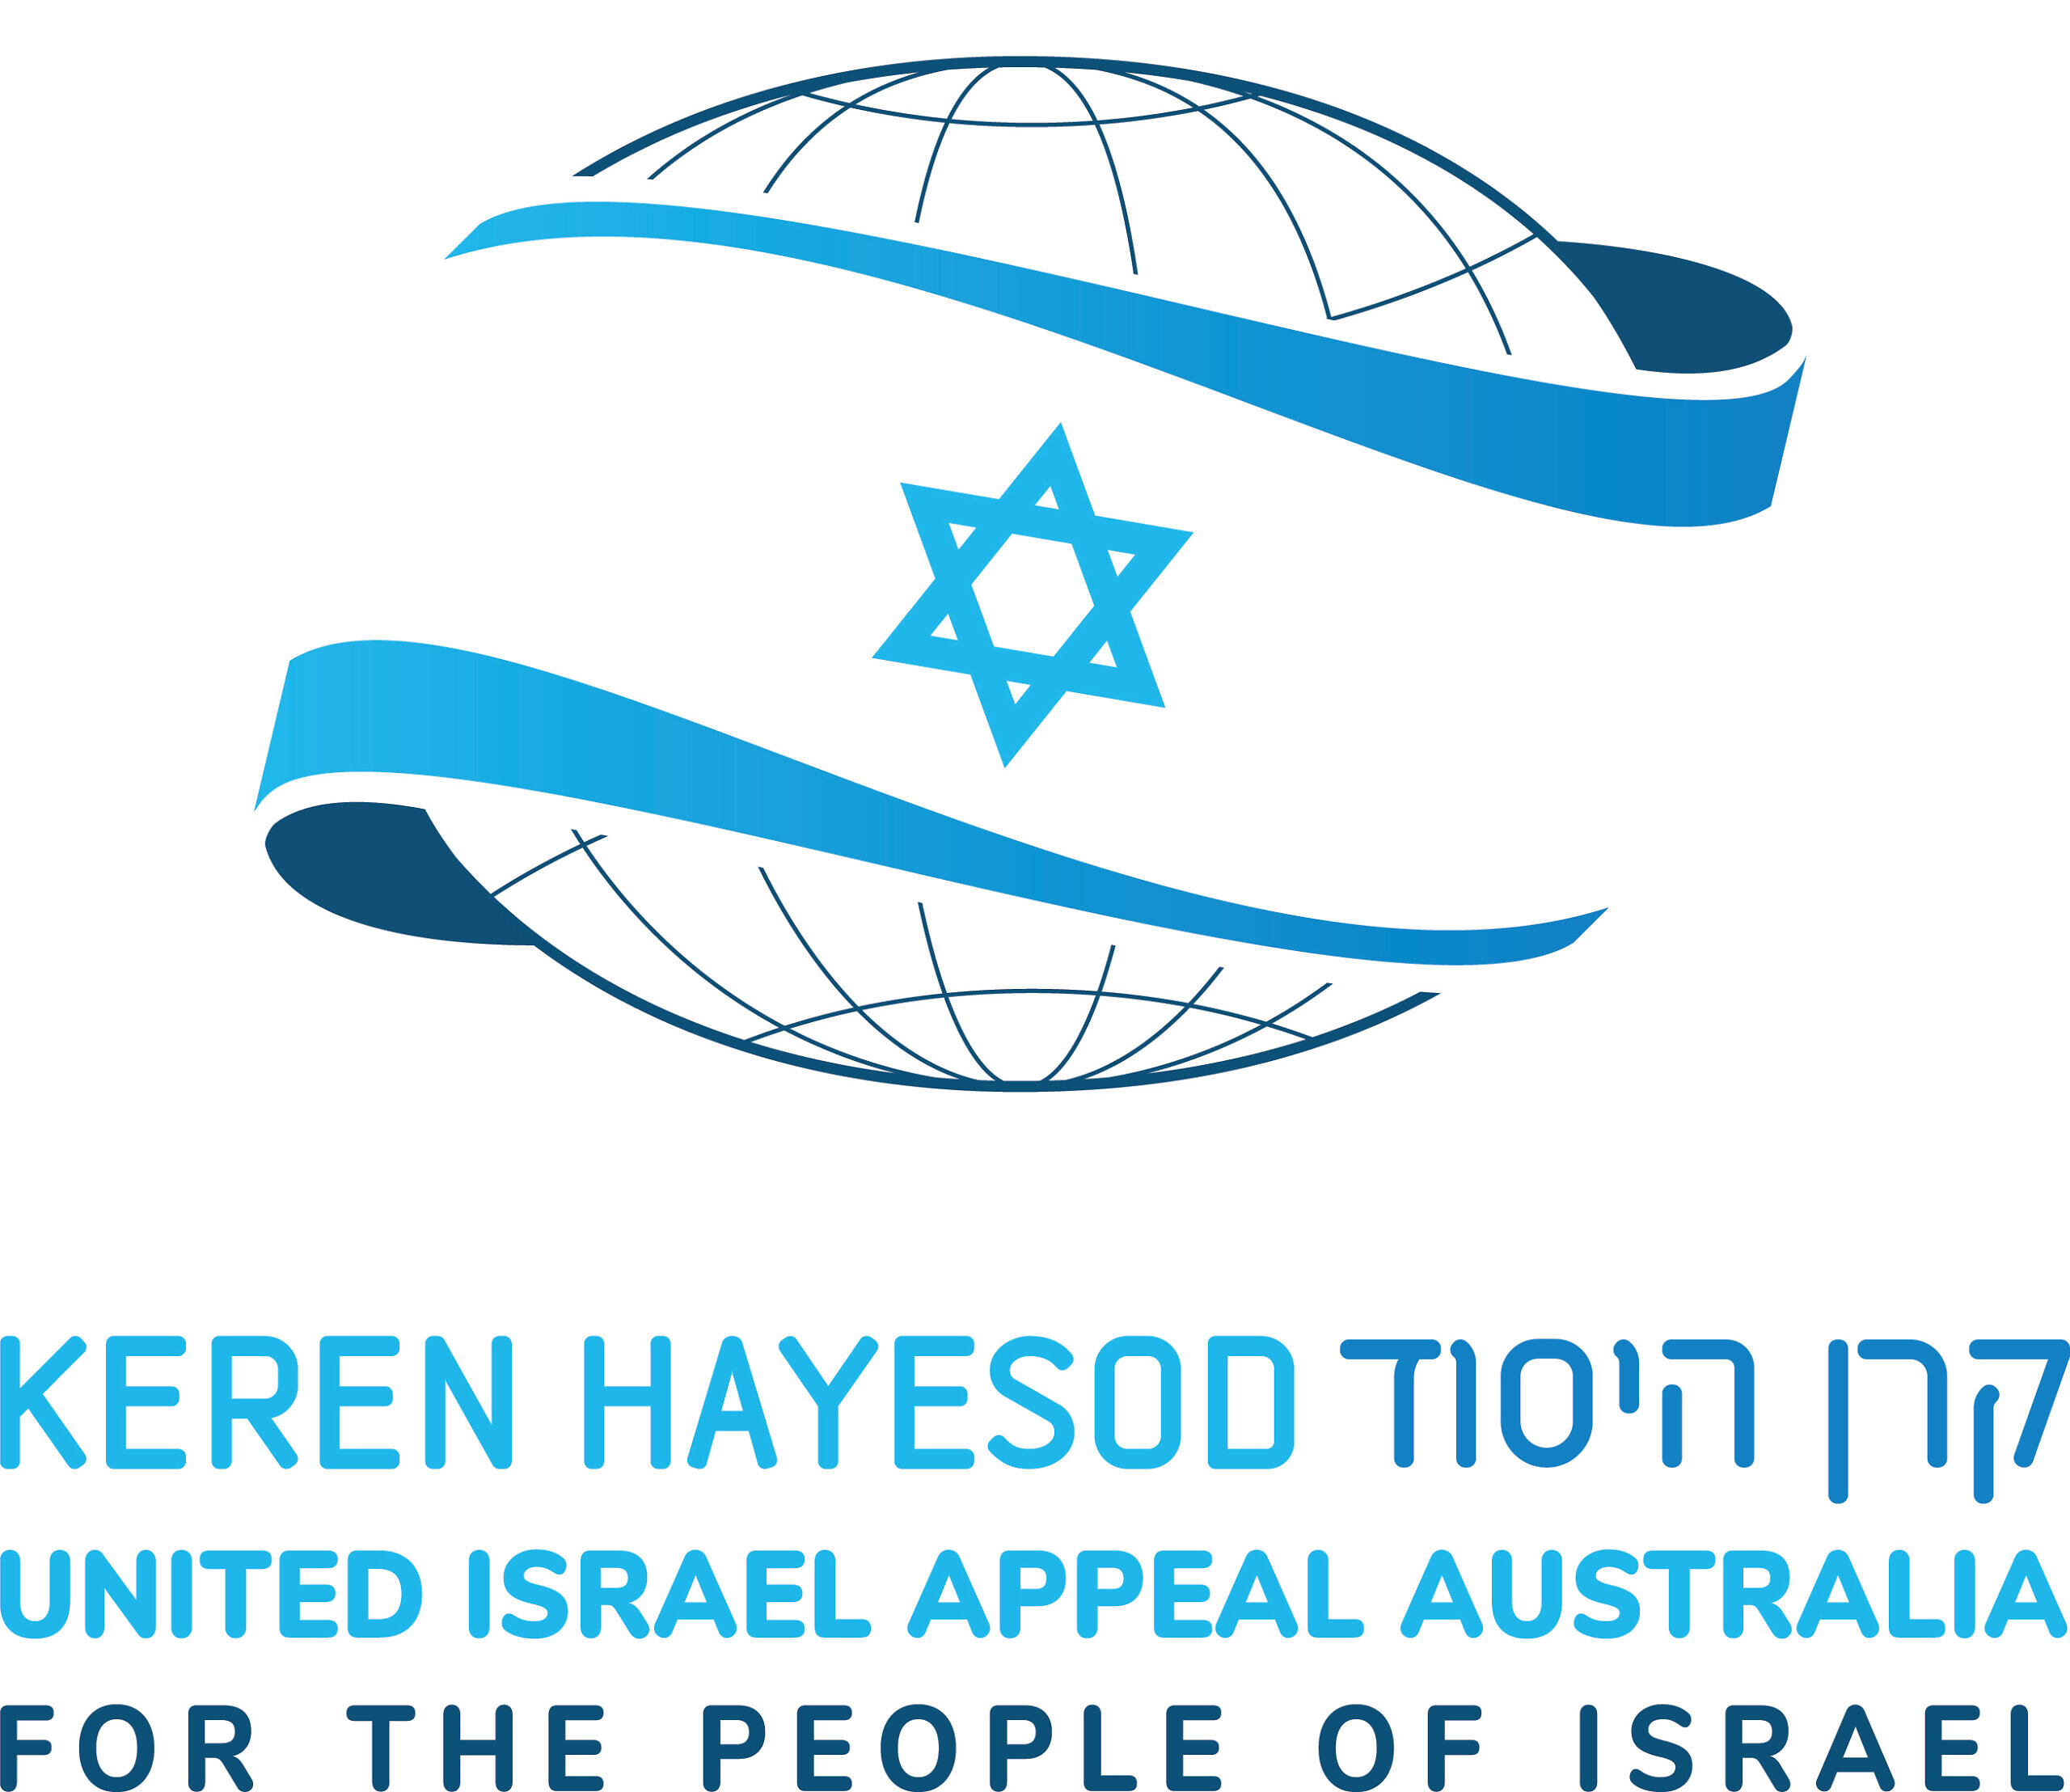 Shabbat Shalom from Keren Hayesod  Keren Hayesod - United Israel Appeal